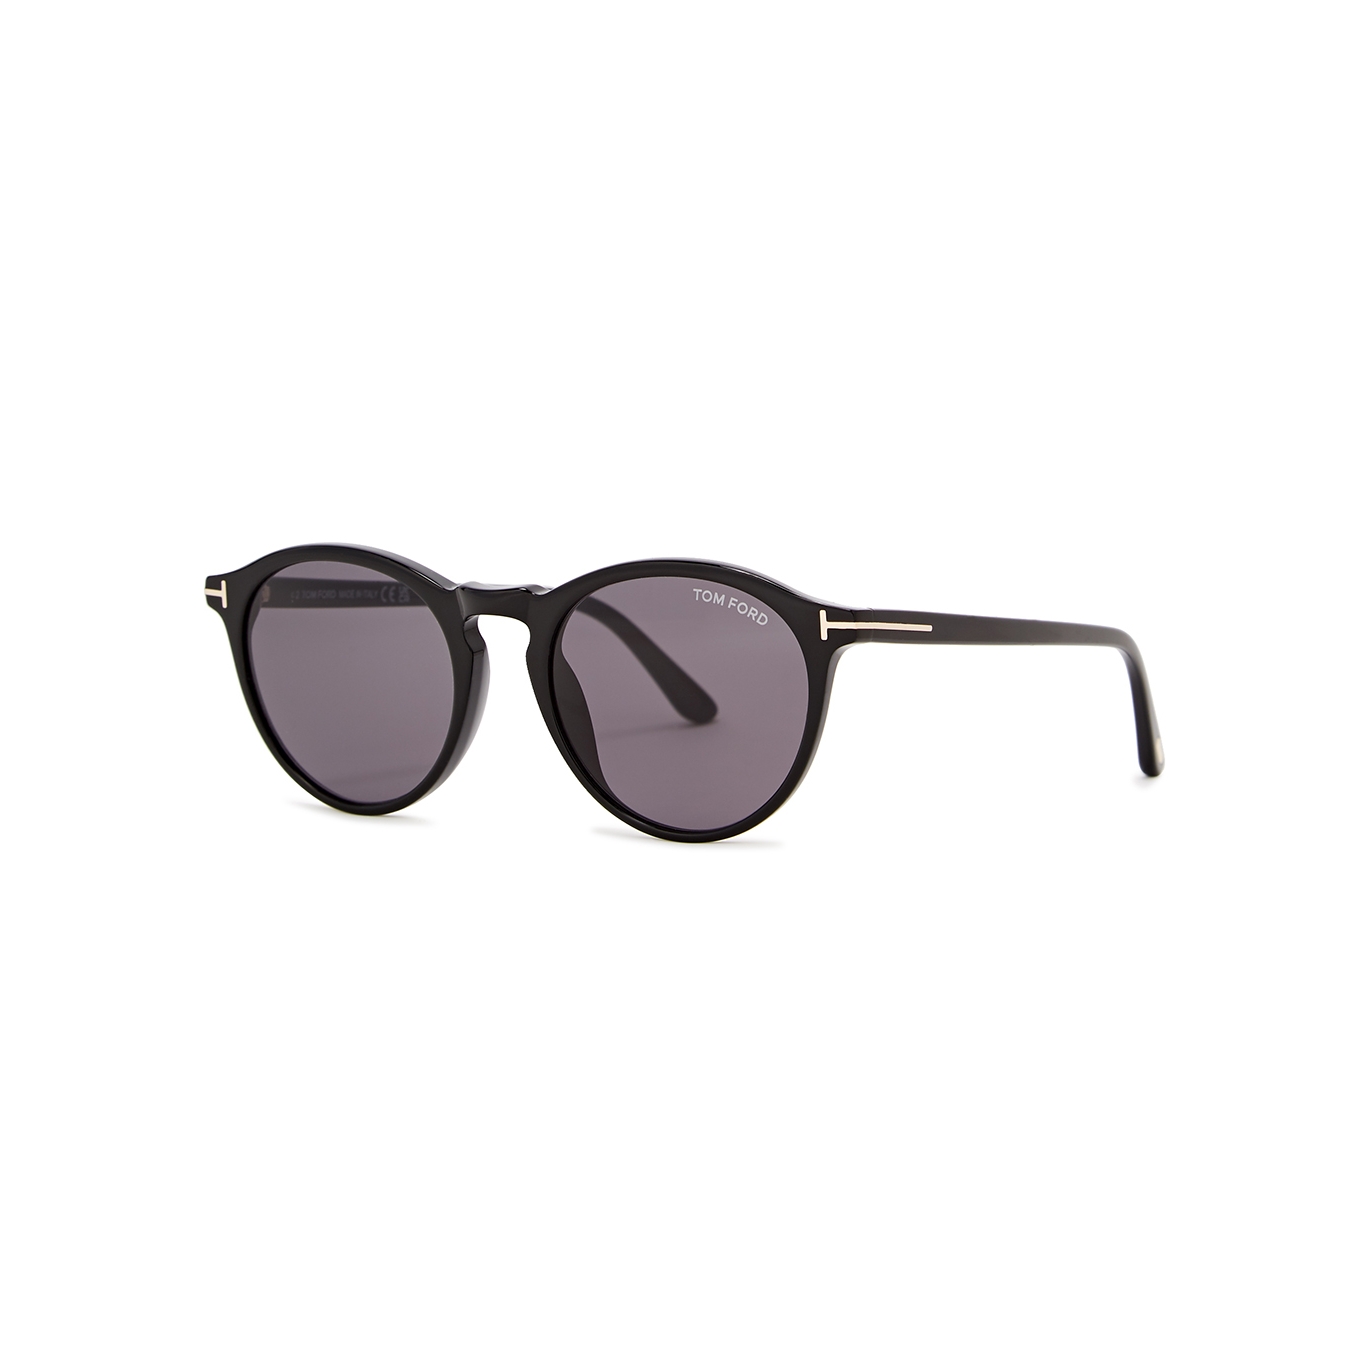 Tom Ford Aurele Black Round-frame Sunglasses - One Size